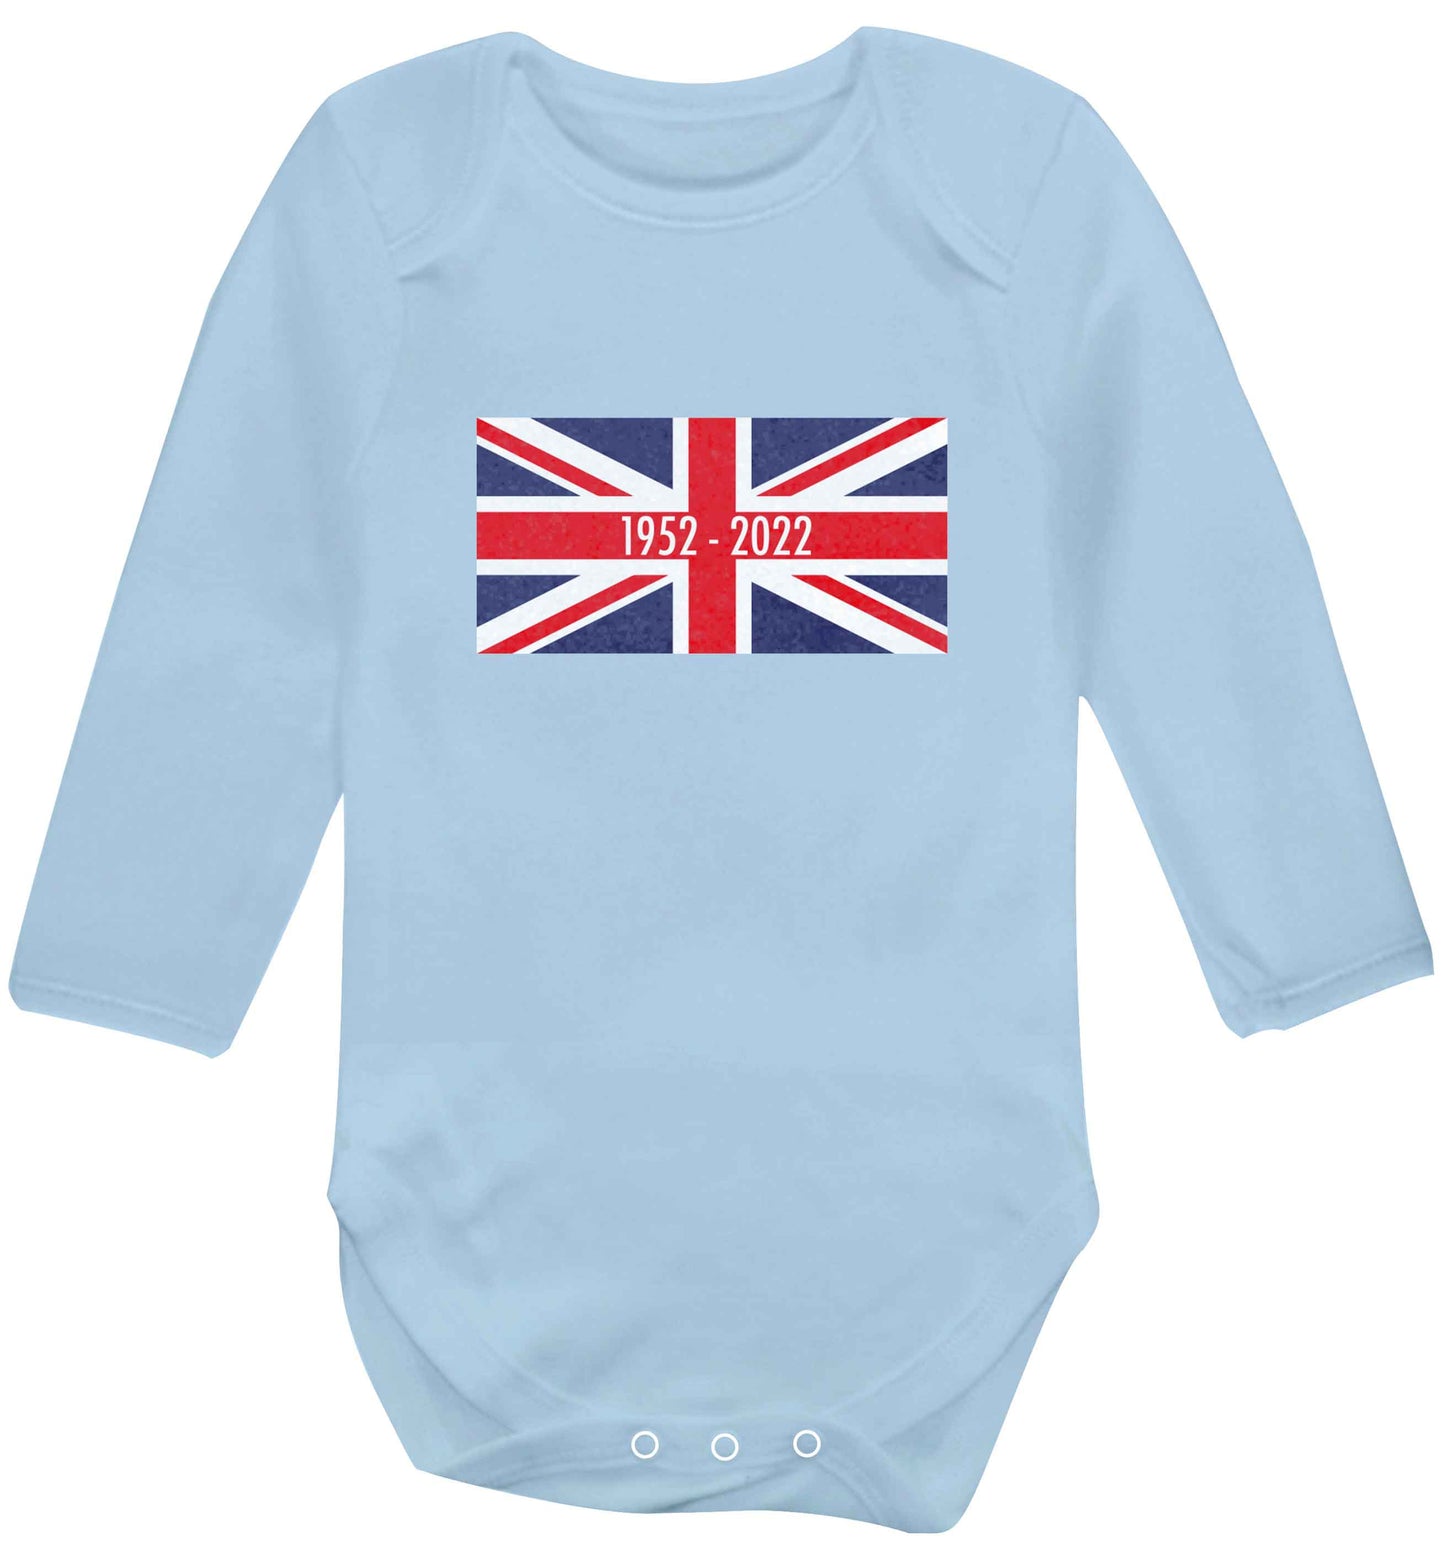 British flag Queens jubilee baby vest long sleeved pale blue 6-12 months